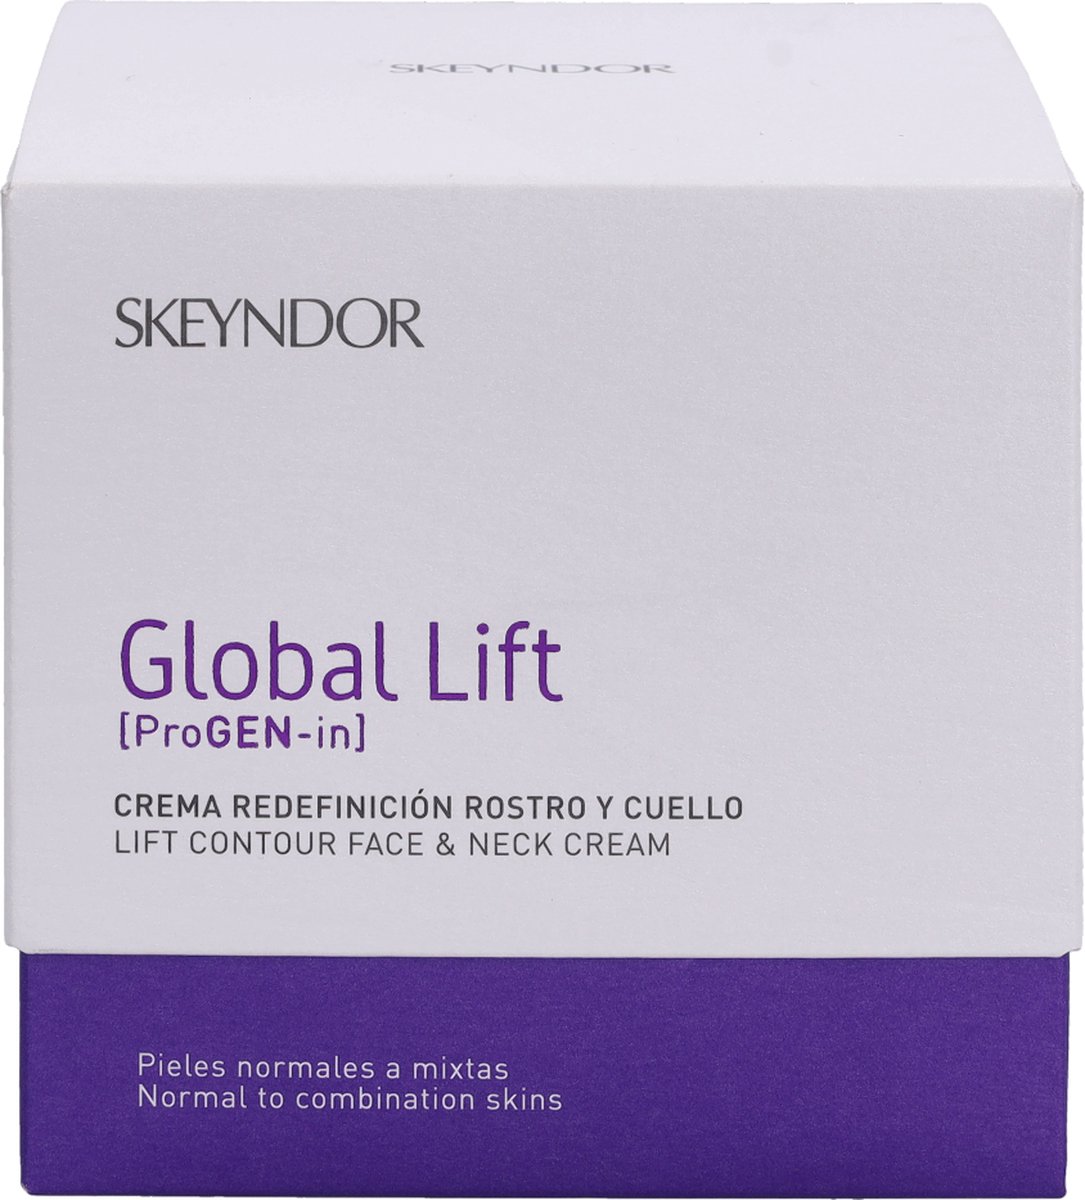 GLOBAL LIFT lift contour elixir face & neck 30 ml